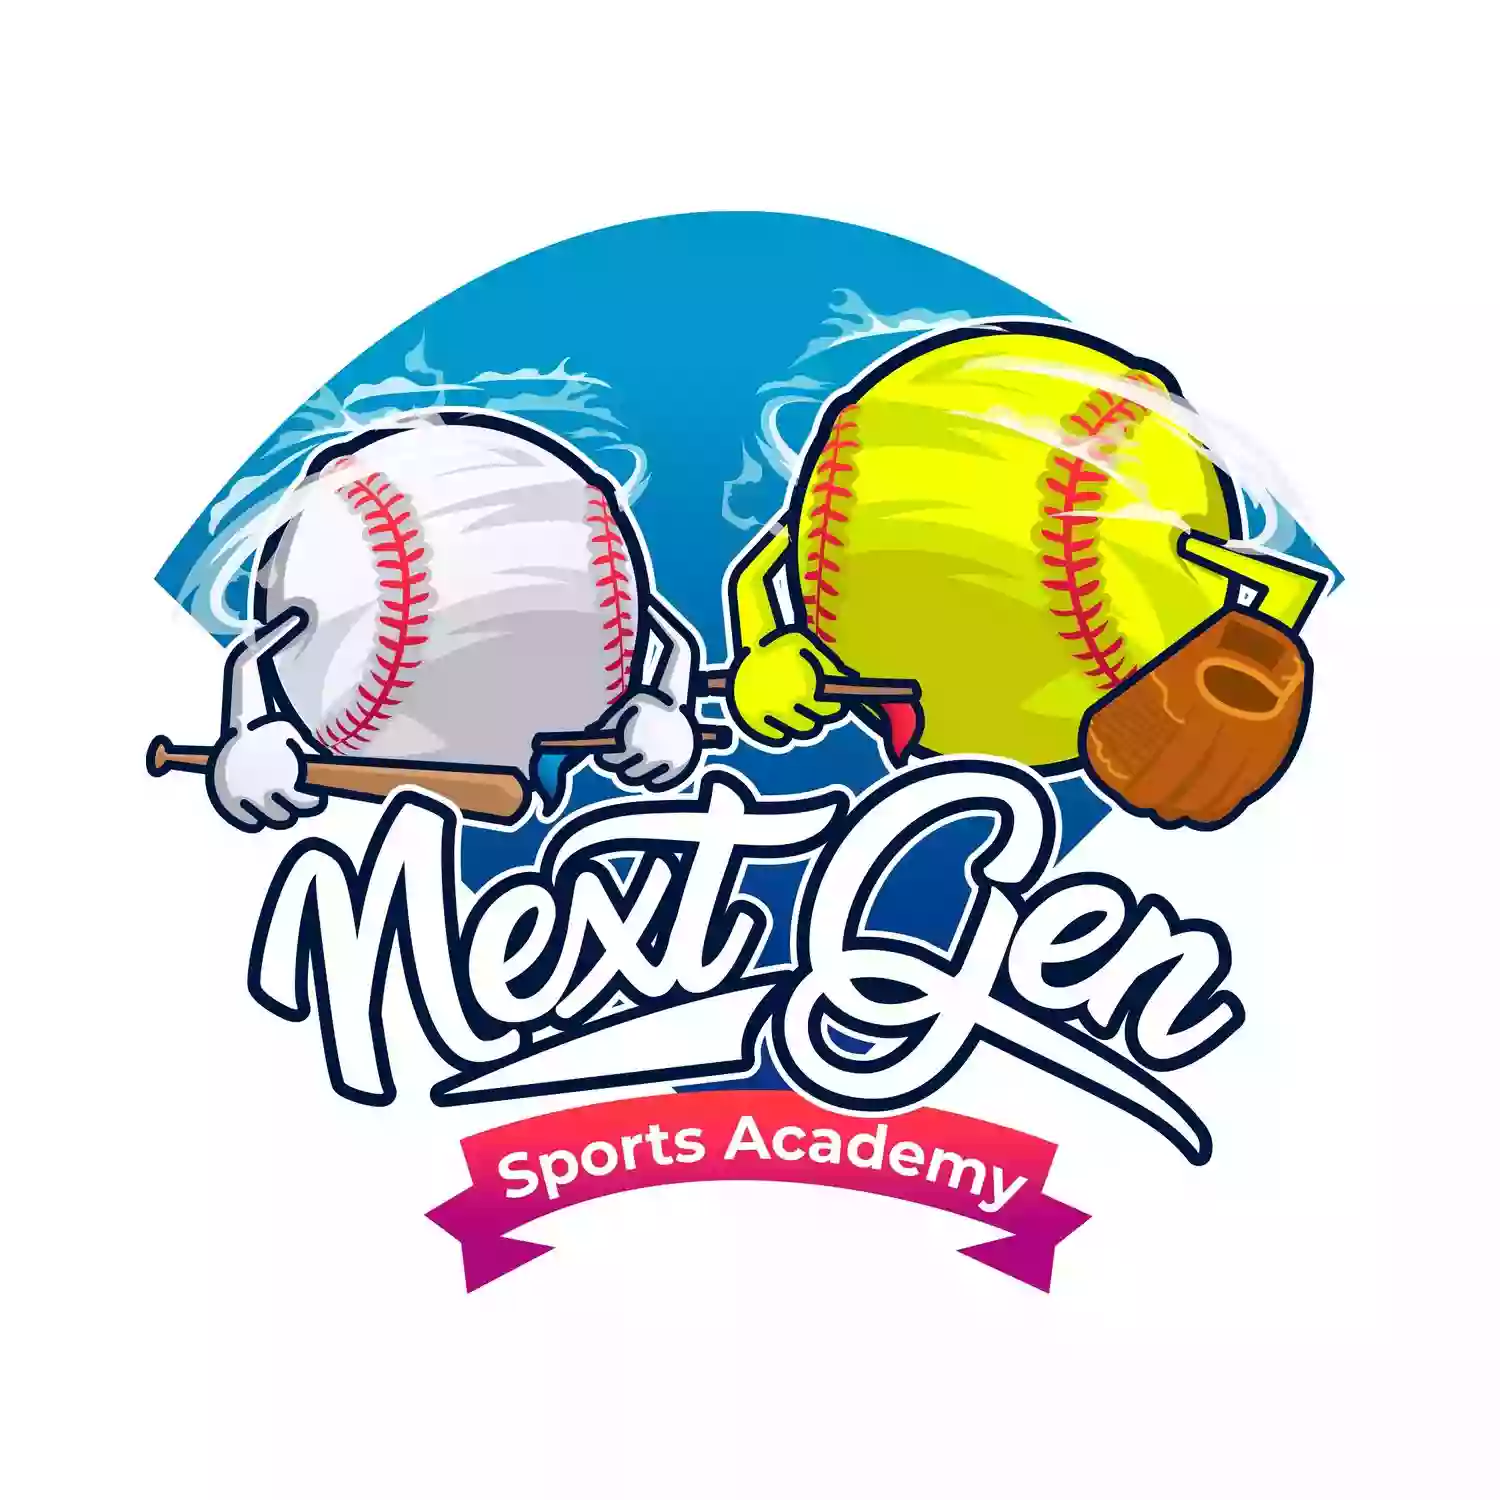 Next Gen Sports Academy, LLC.